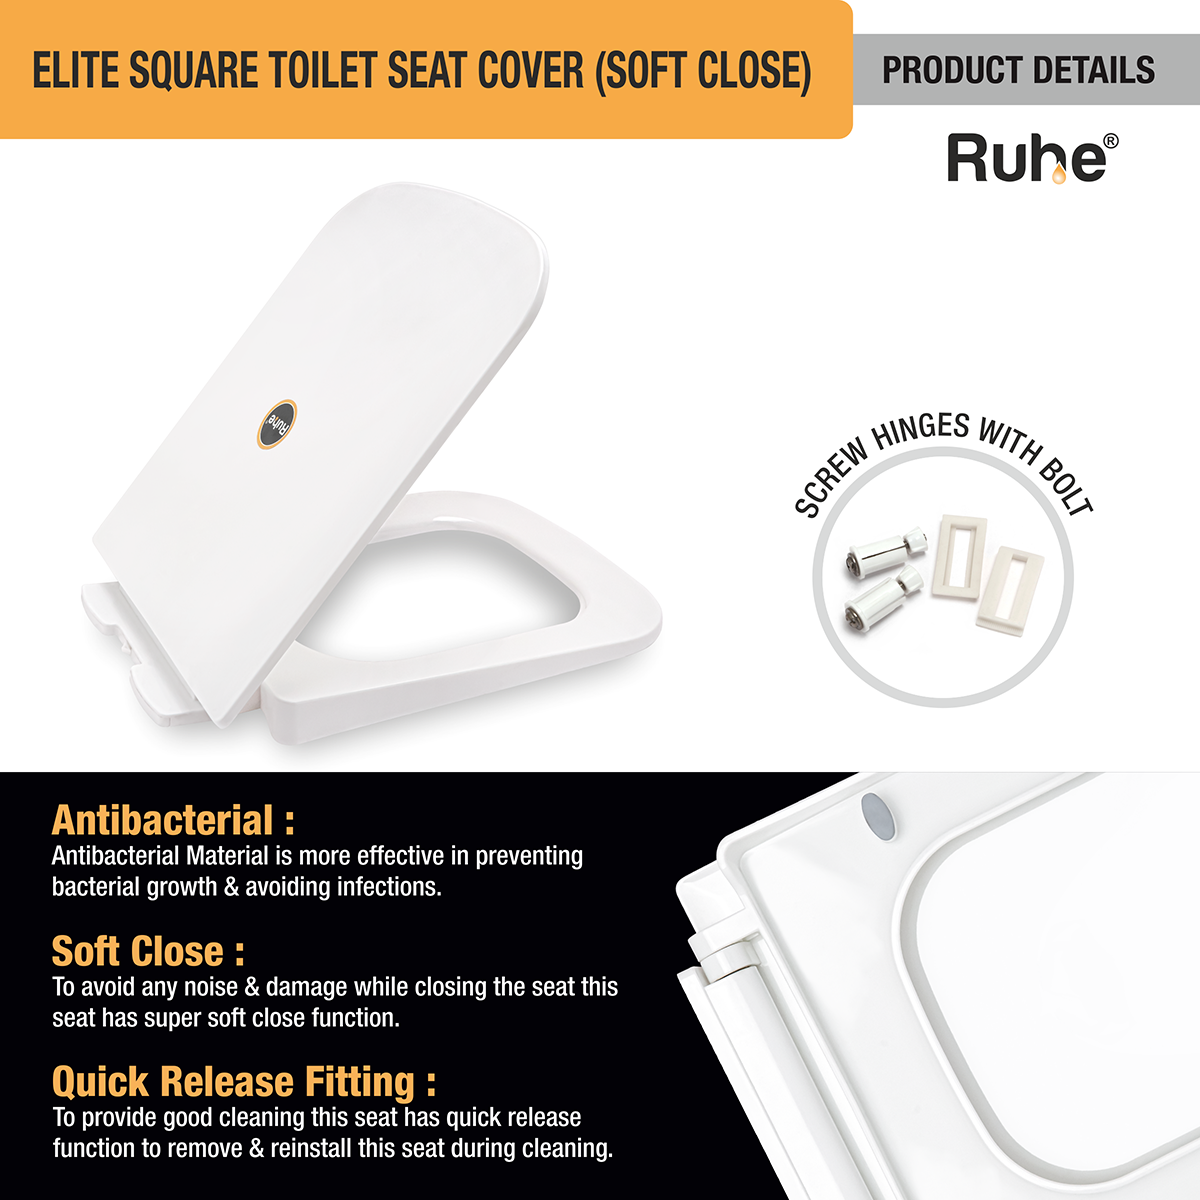 Elite Square Toilet Seat Cover (Soft Close) product details